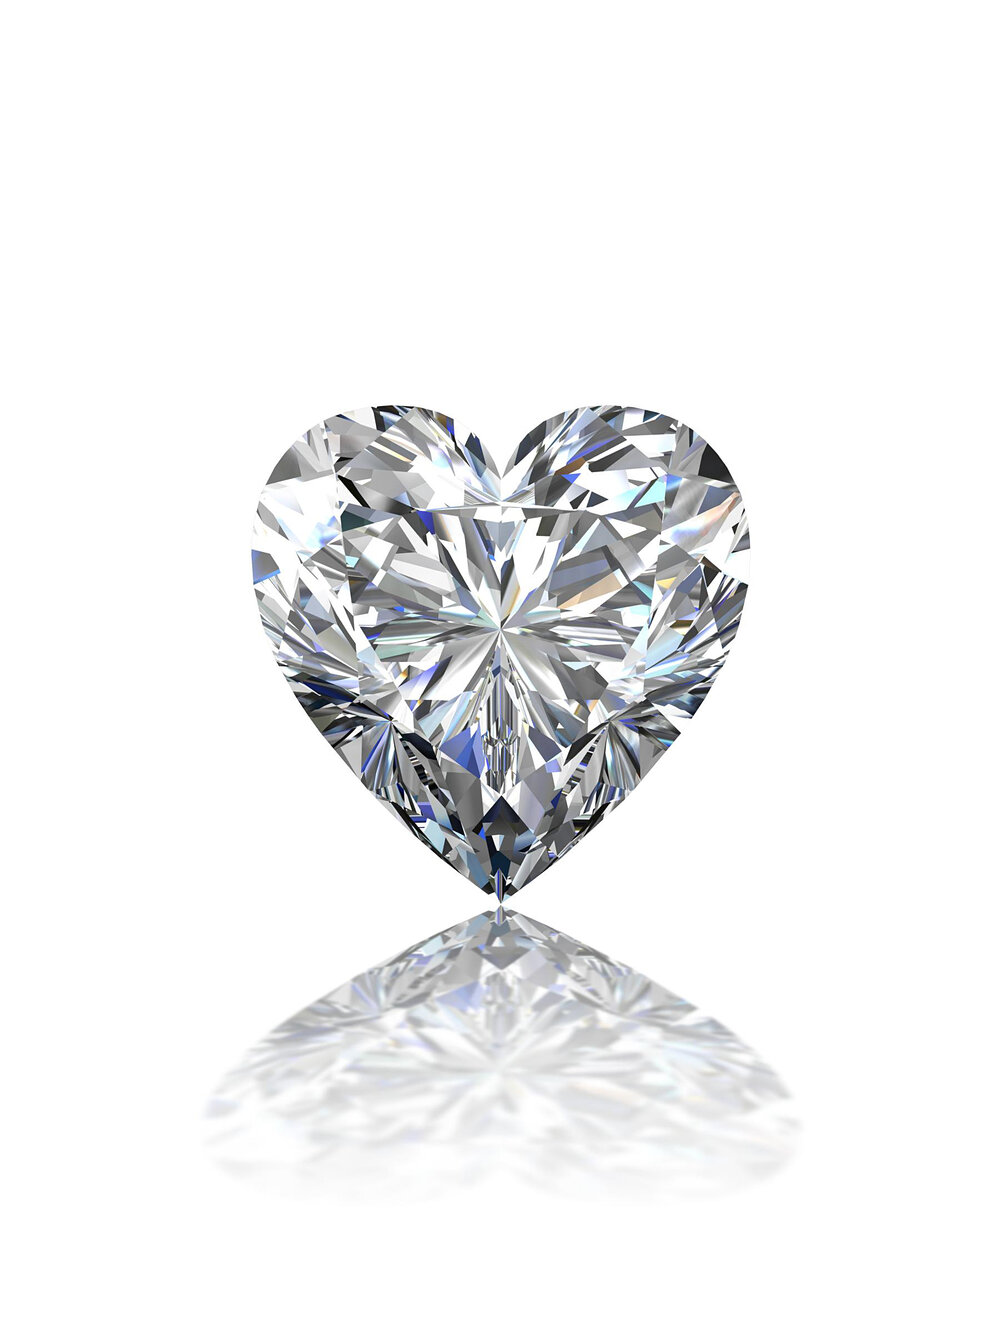 diamant taille coeur.jpg